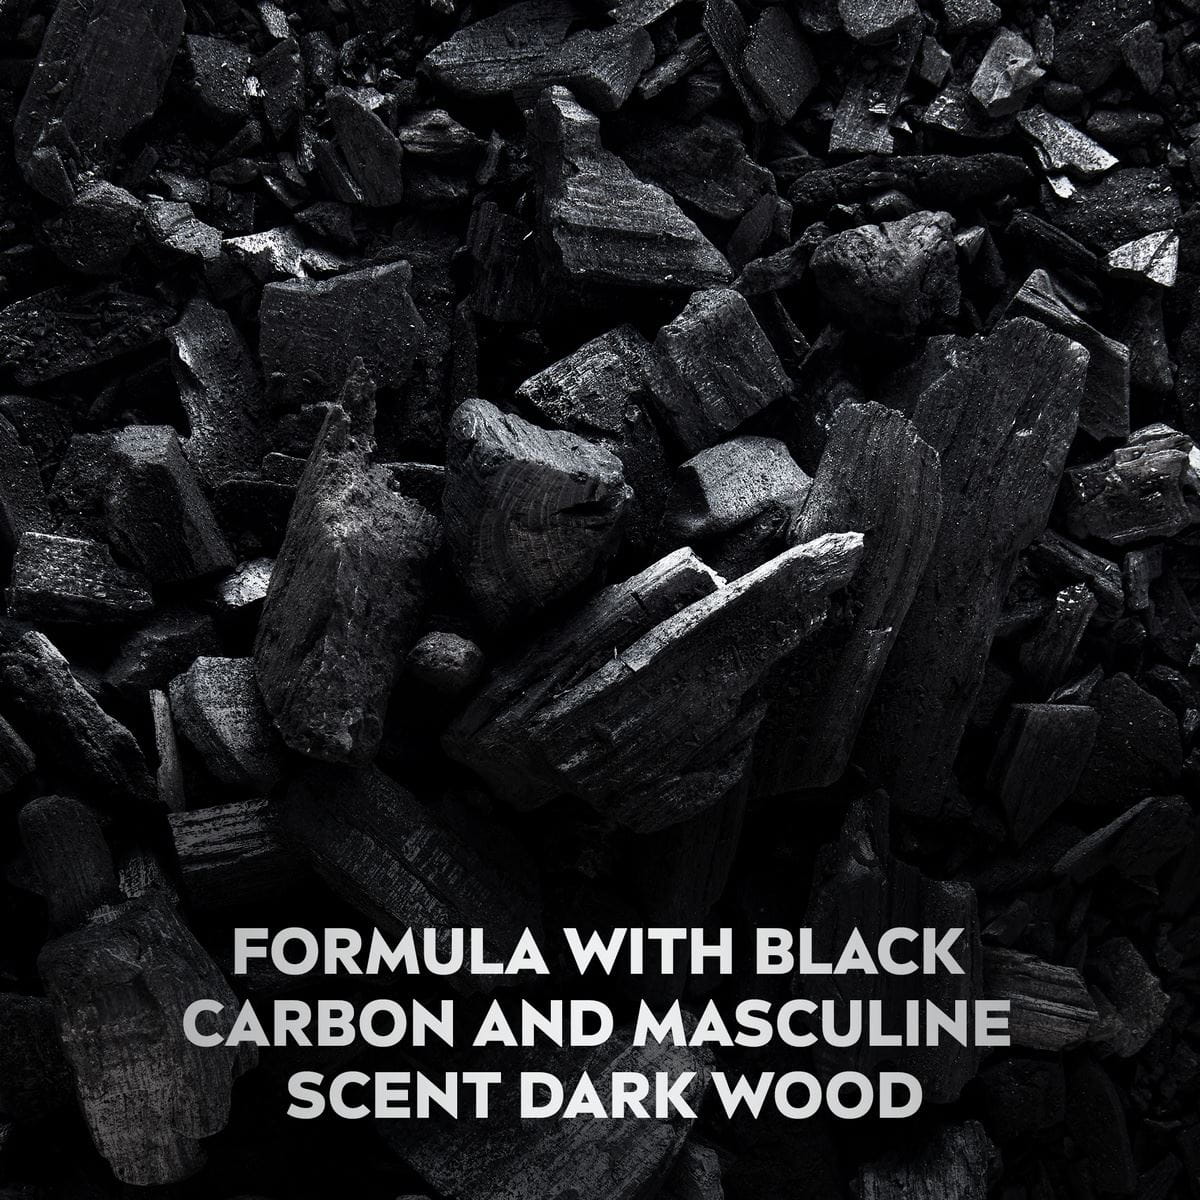 50ml Deep Black Carbon Anti-Perspirant Roll-On – NIVEA MEN